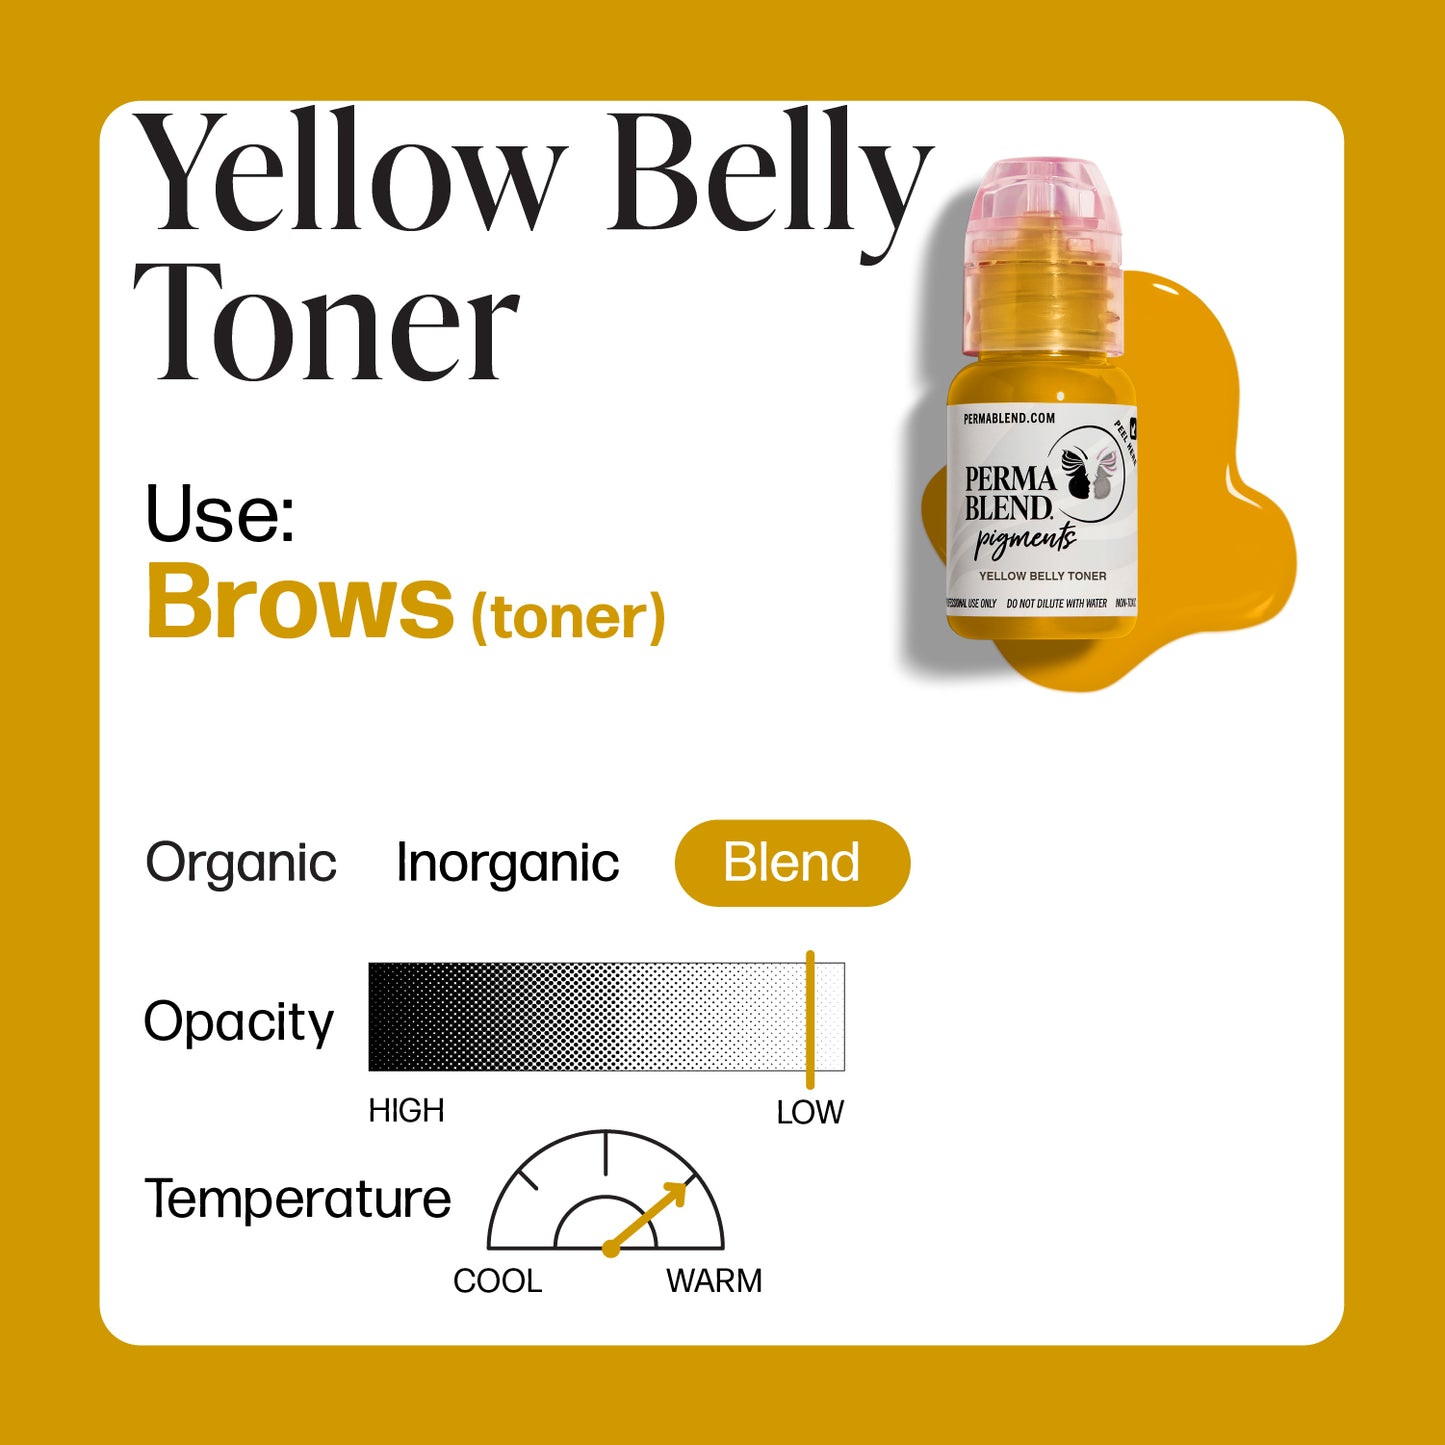 Yellow Belly Toner